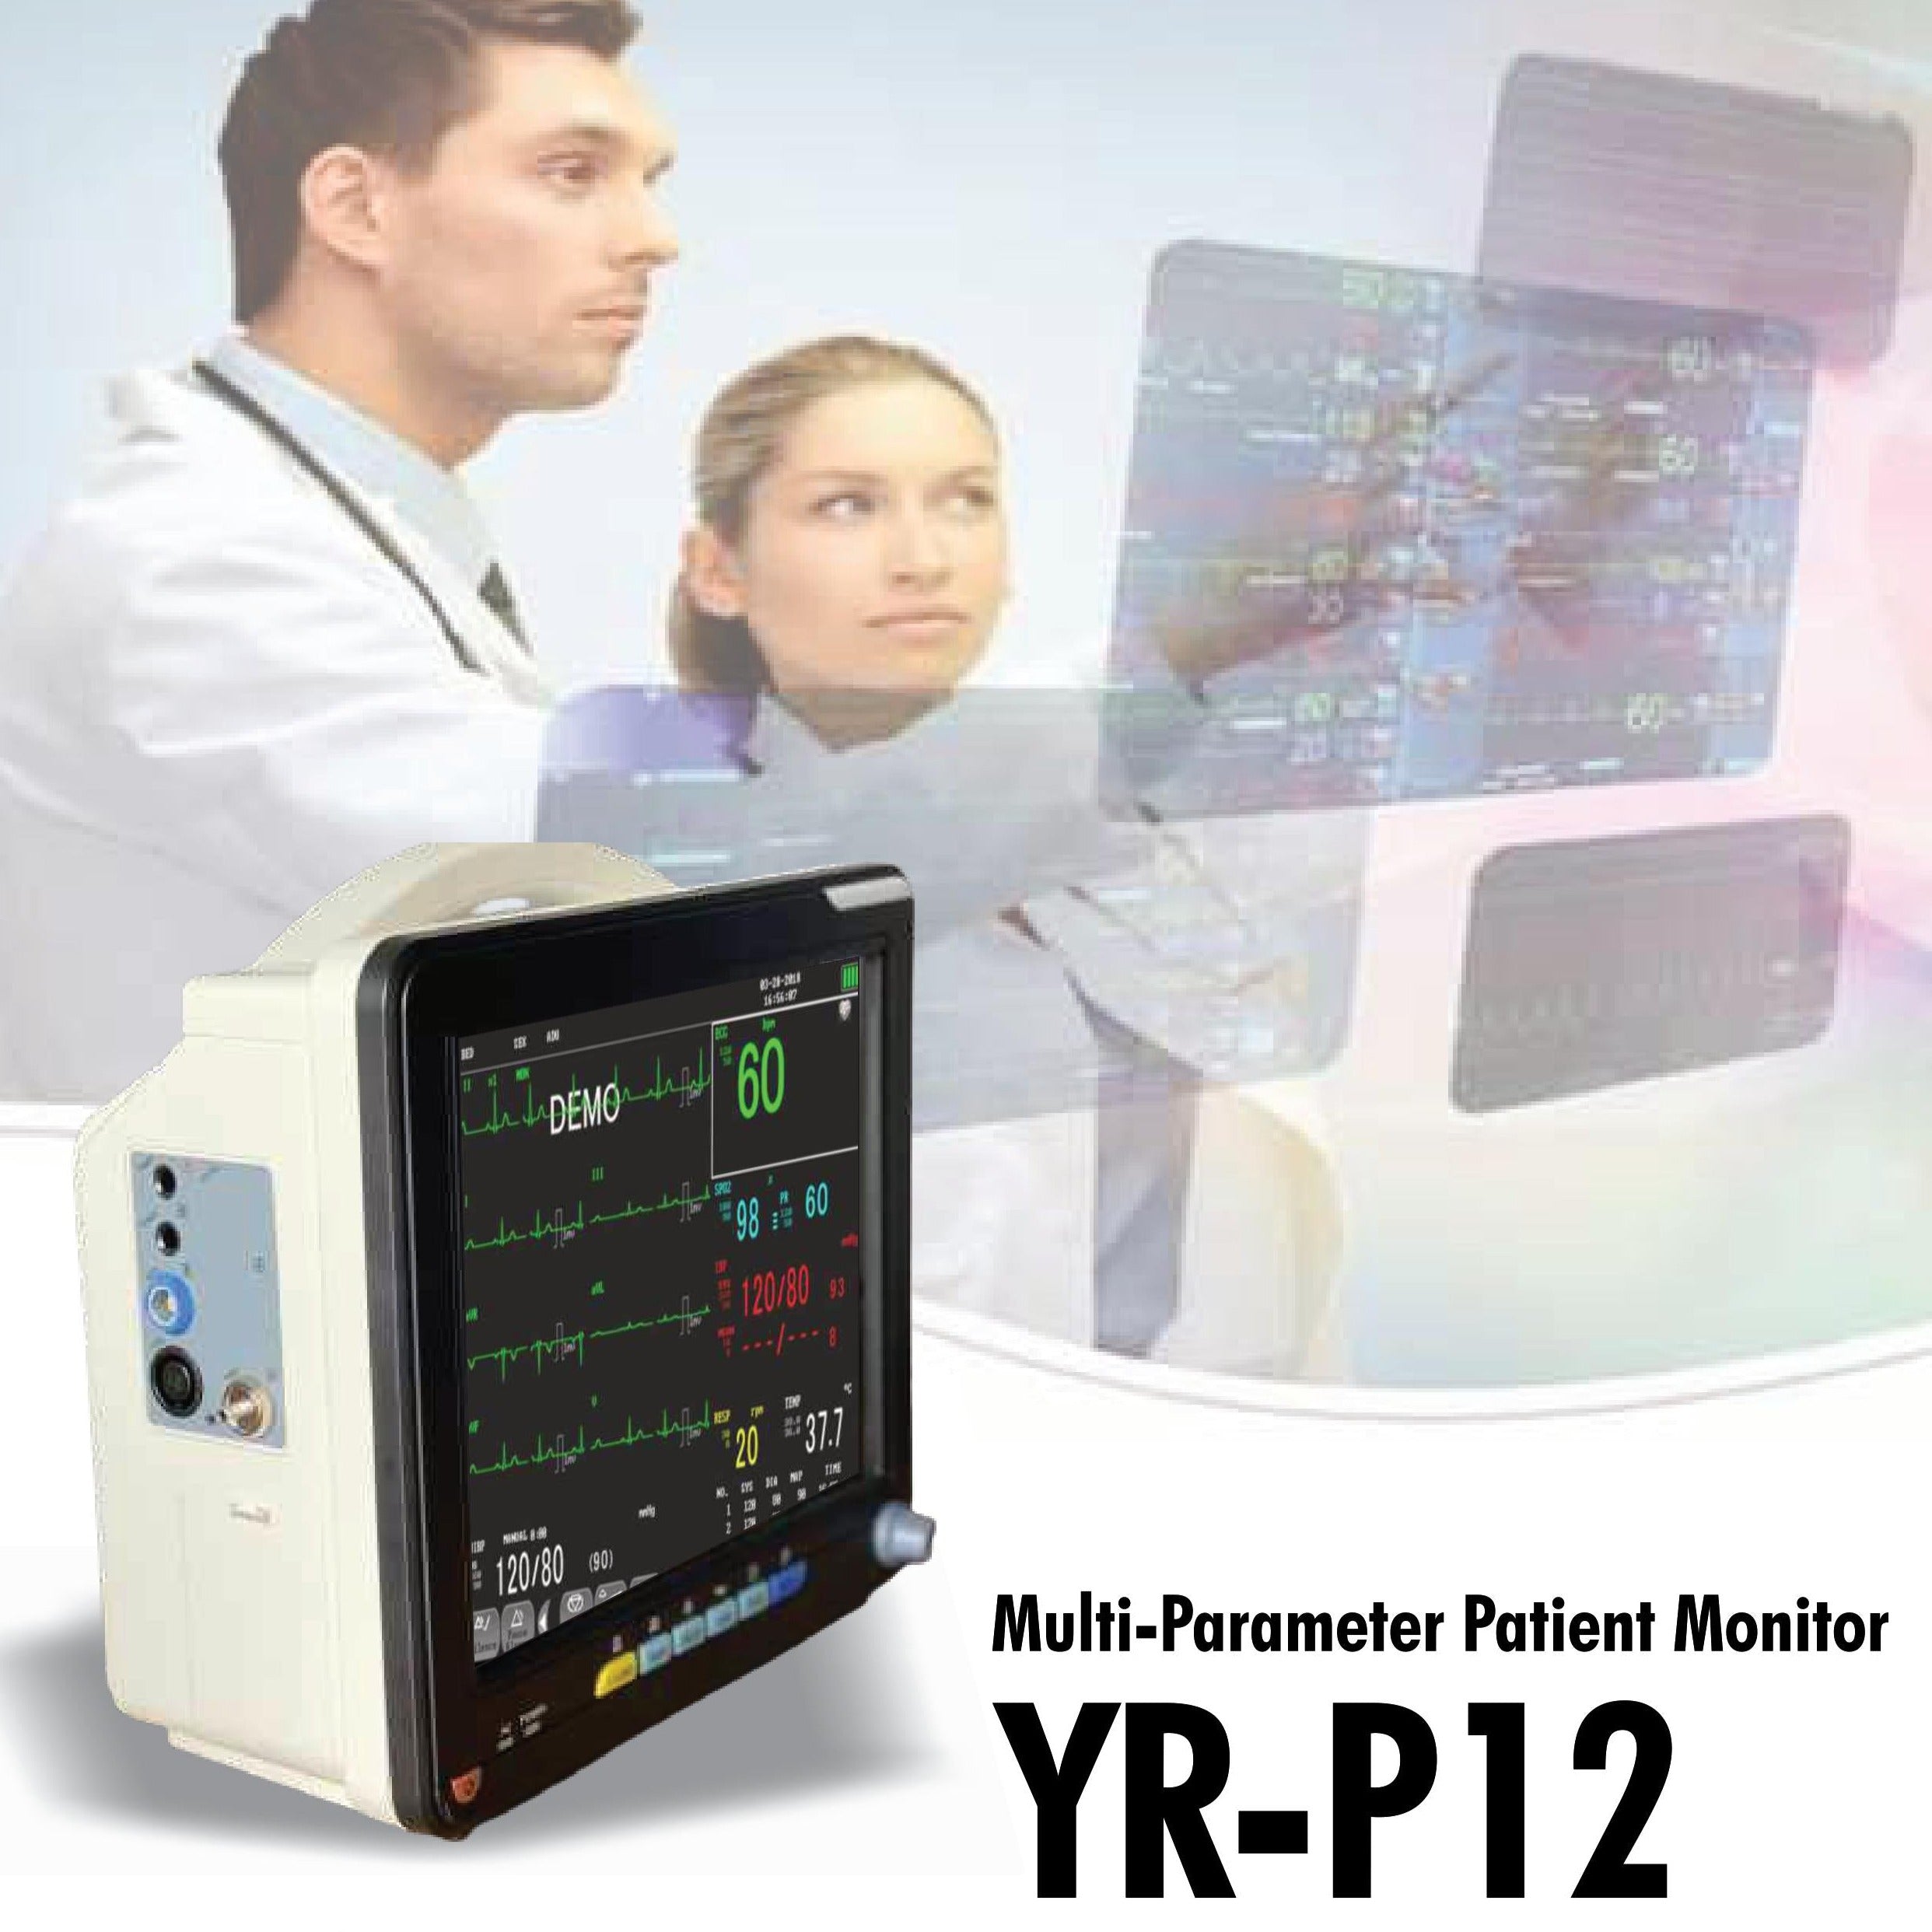 Multi Parameter Patient Monitor YR-P12 - Patient Monitors in Pakistan - Best Quality Multi Parameter Patient Monitors